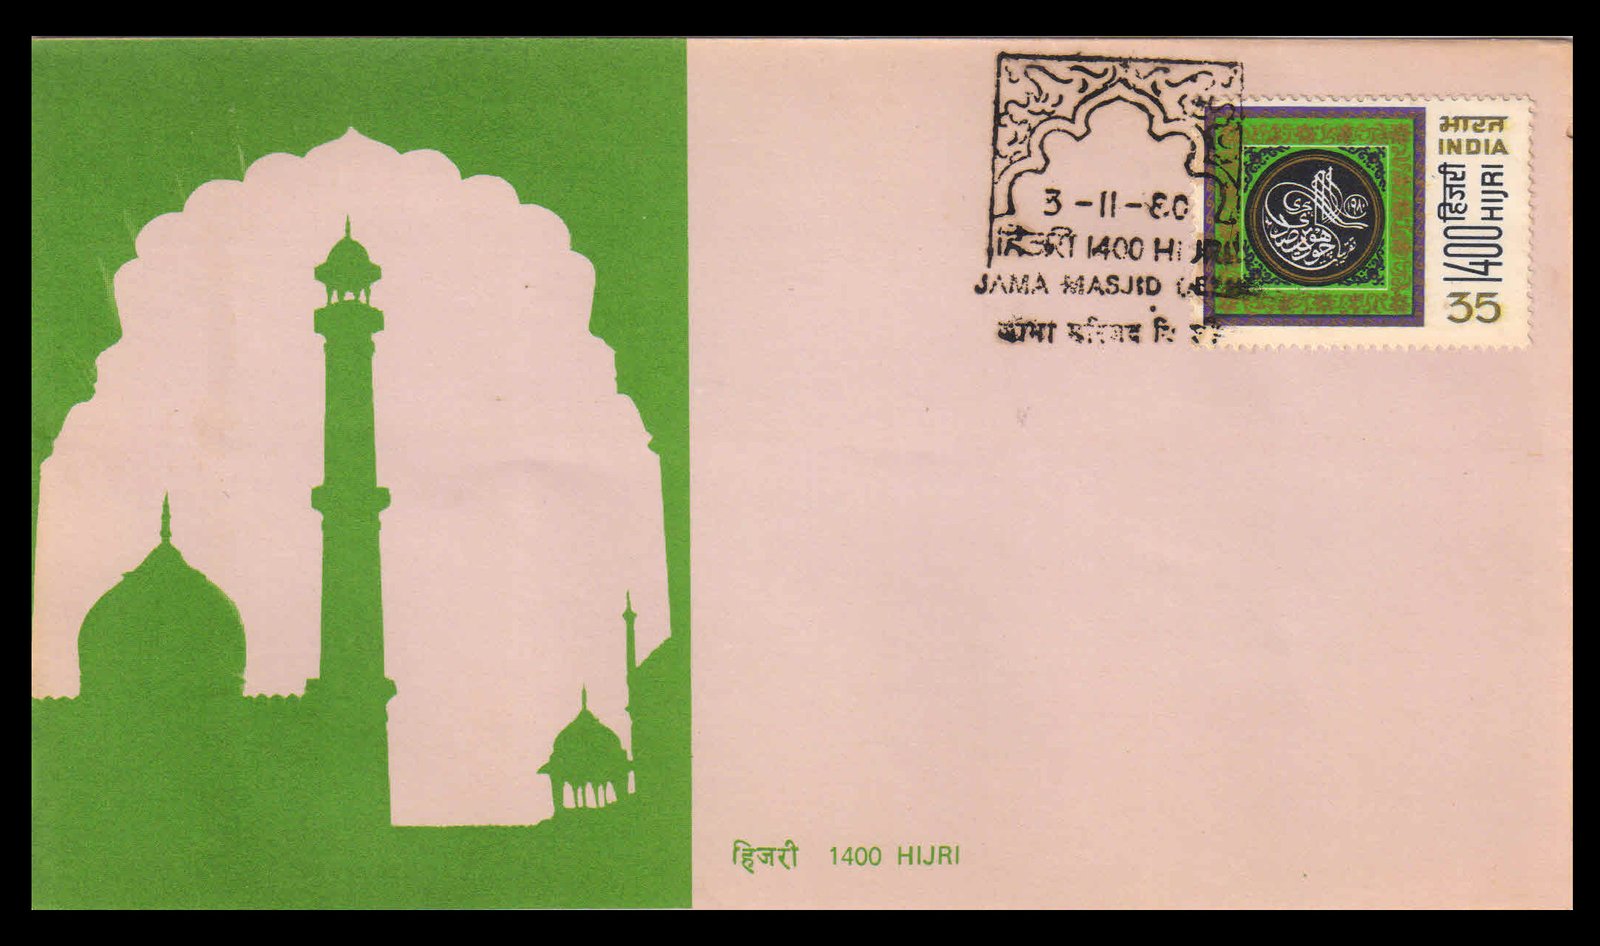 INDIA 3-11-1980 - HIJRI 1400 First Day Cover with JAMA MASJID, DELHI Cancellation